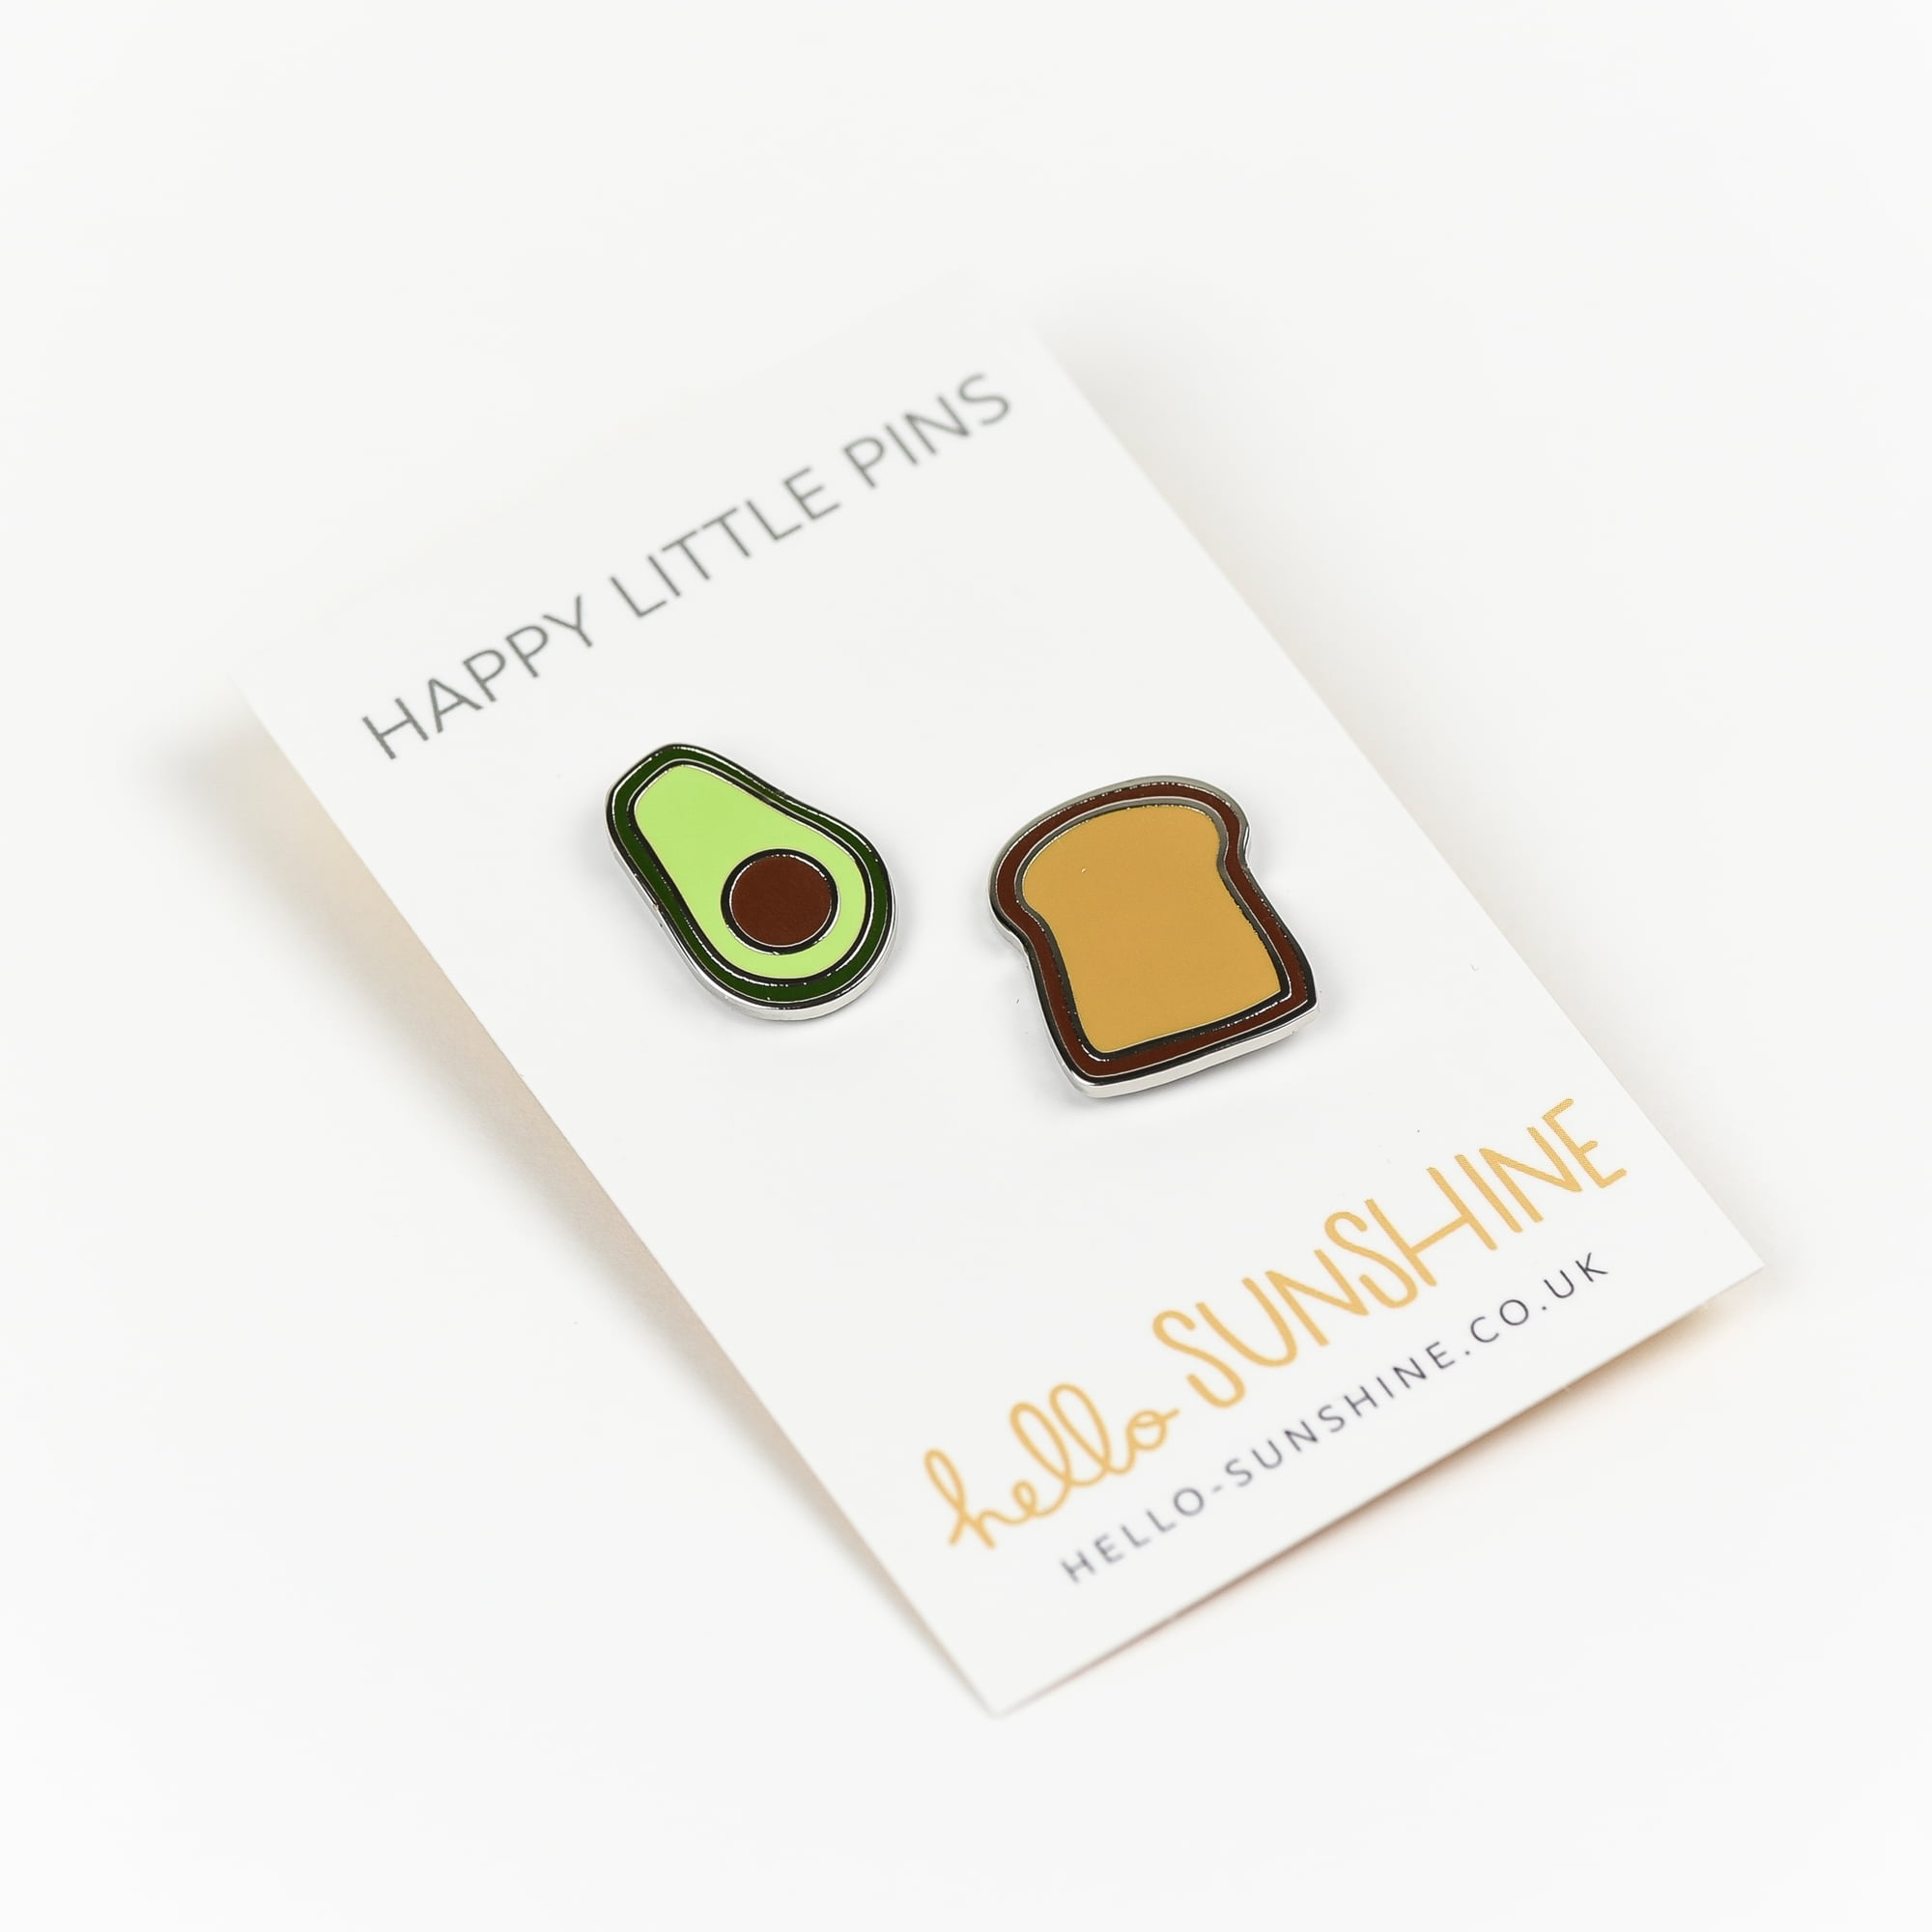 Avocado on Toast Enamel Pin Set by Hello sunshine